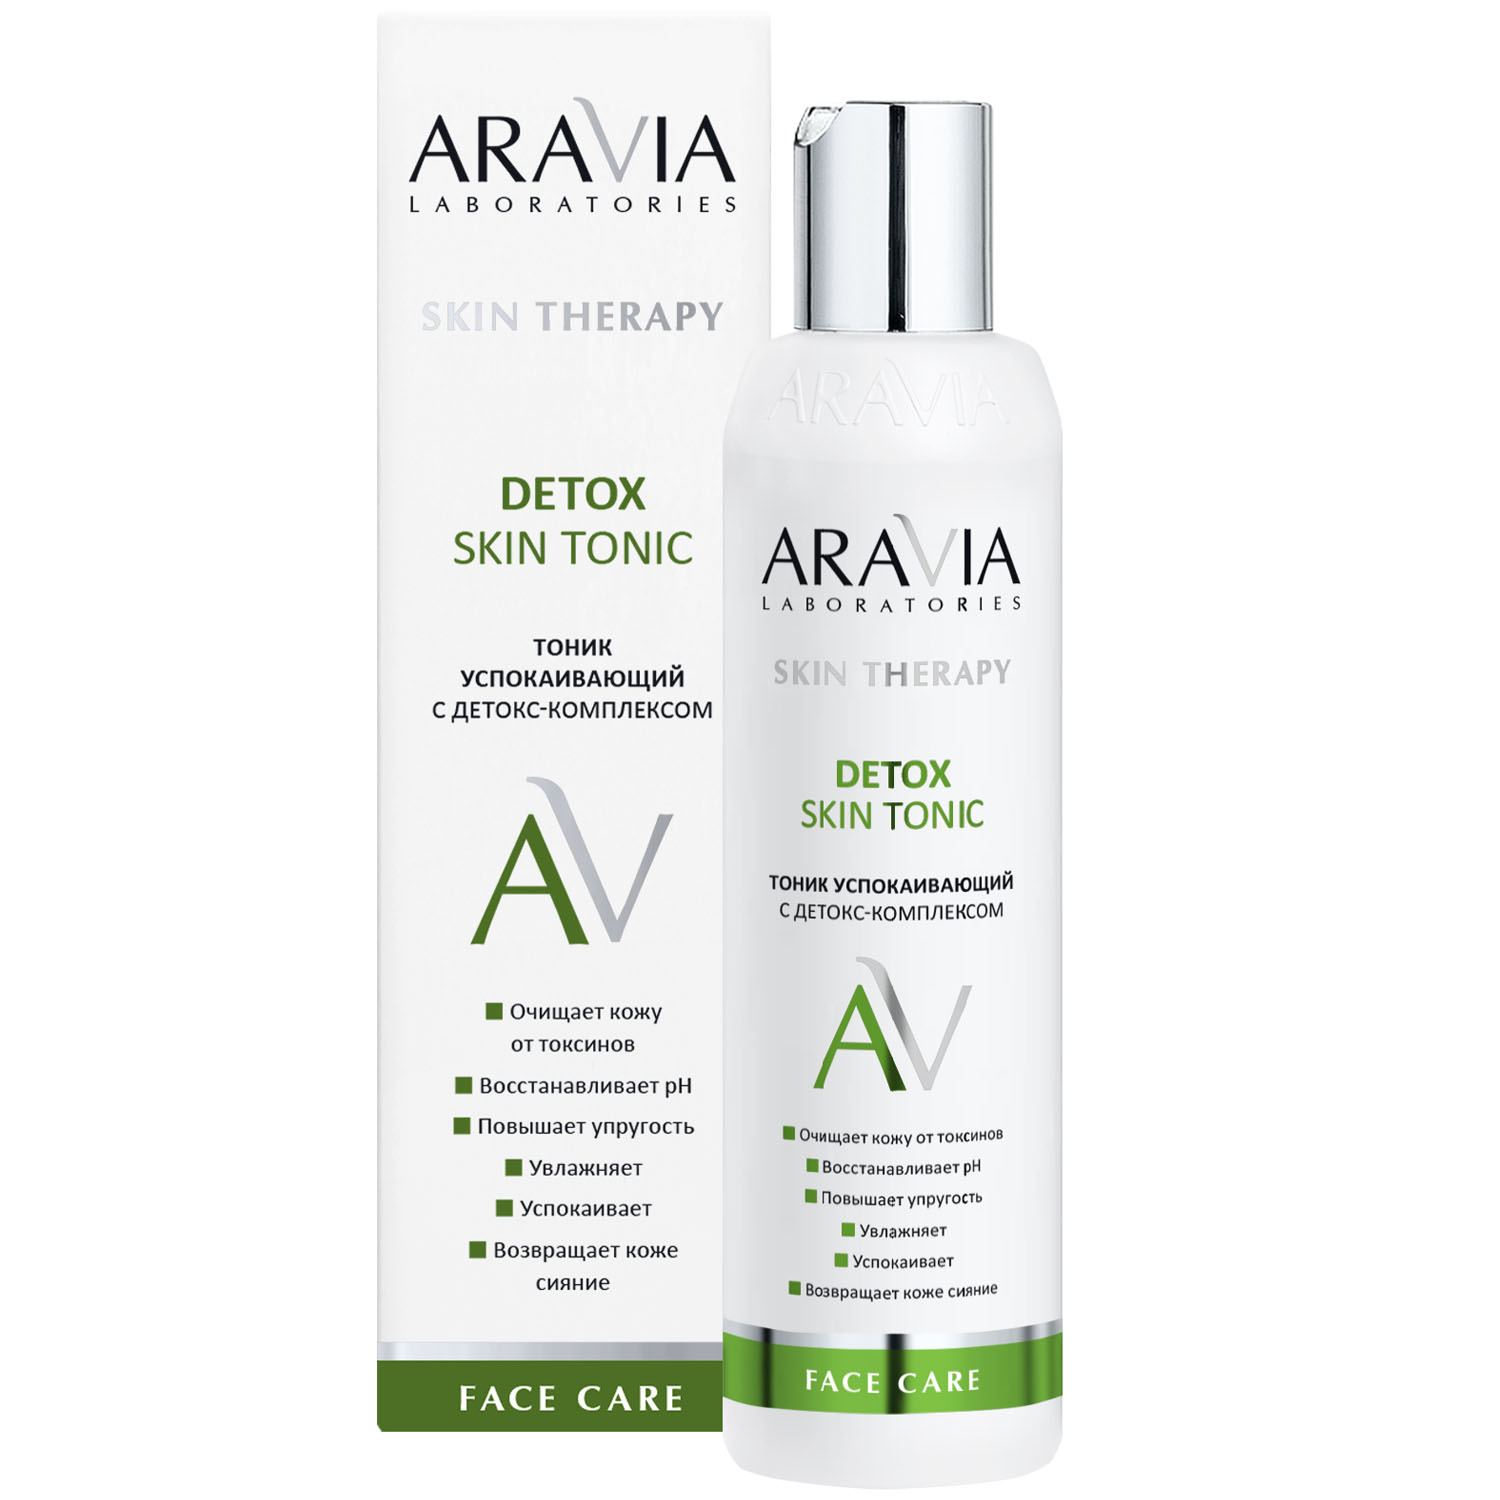 Aravia Laboratories Тоник успокаивающий с детокс-комплексом Detox Skin Tonic, 200 мл (Aravia Laboratories, Уход за лицом)